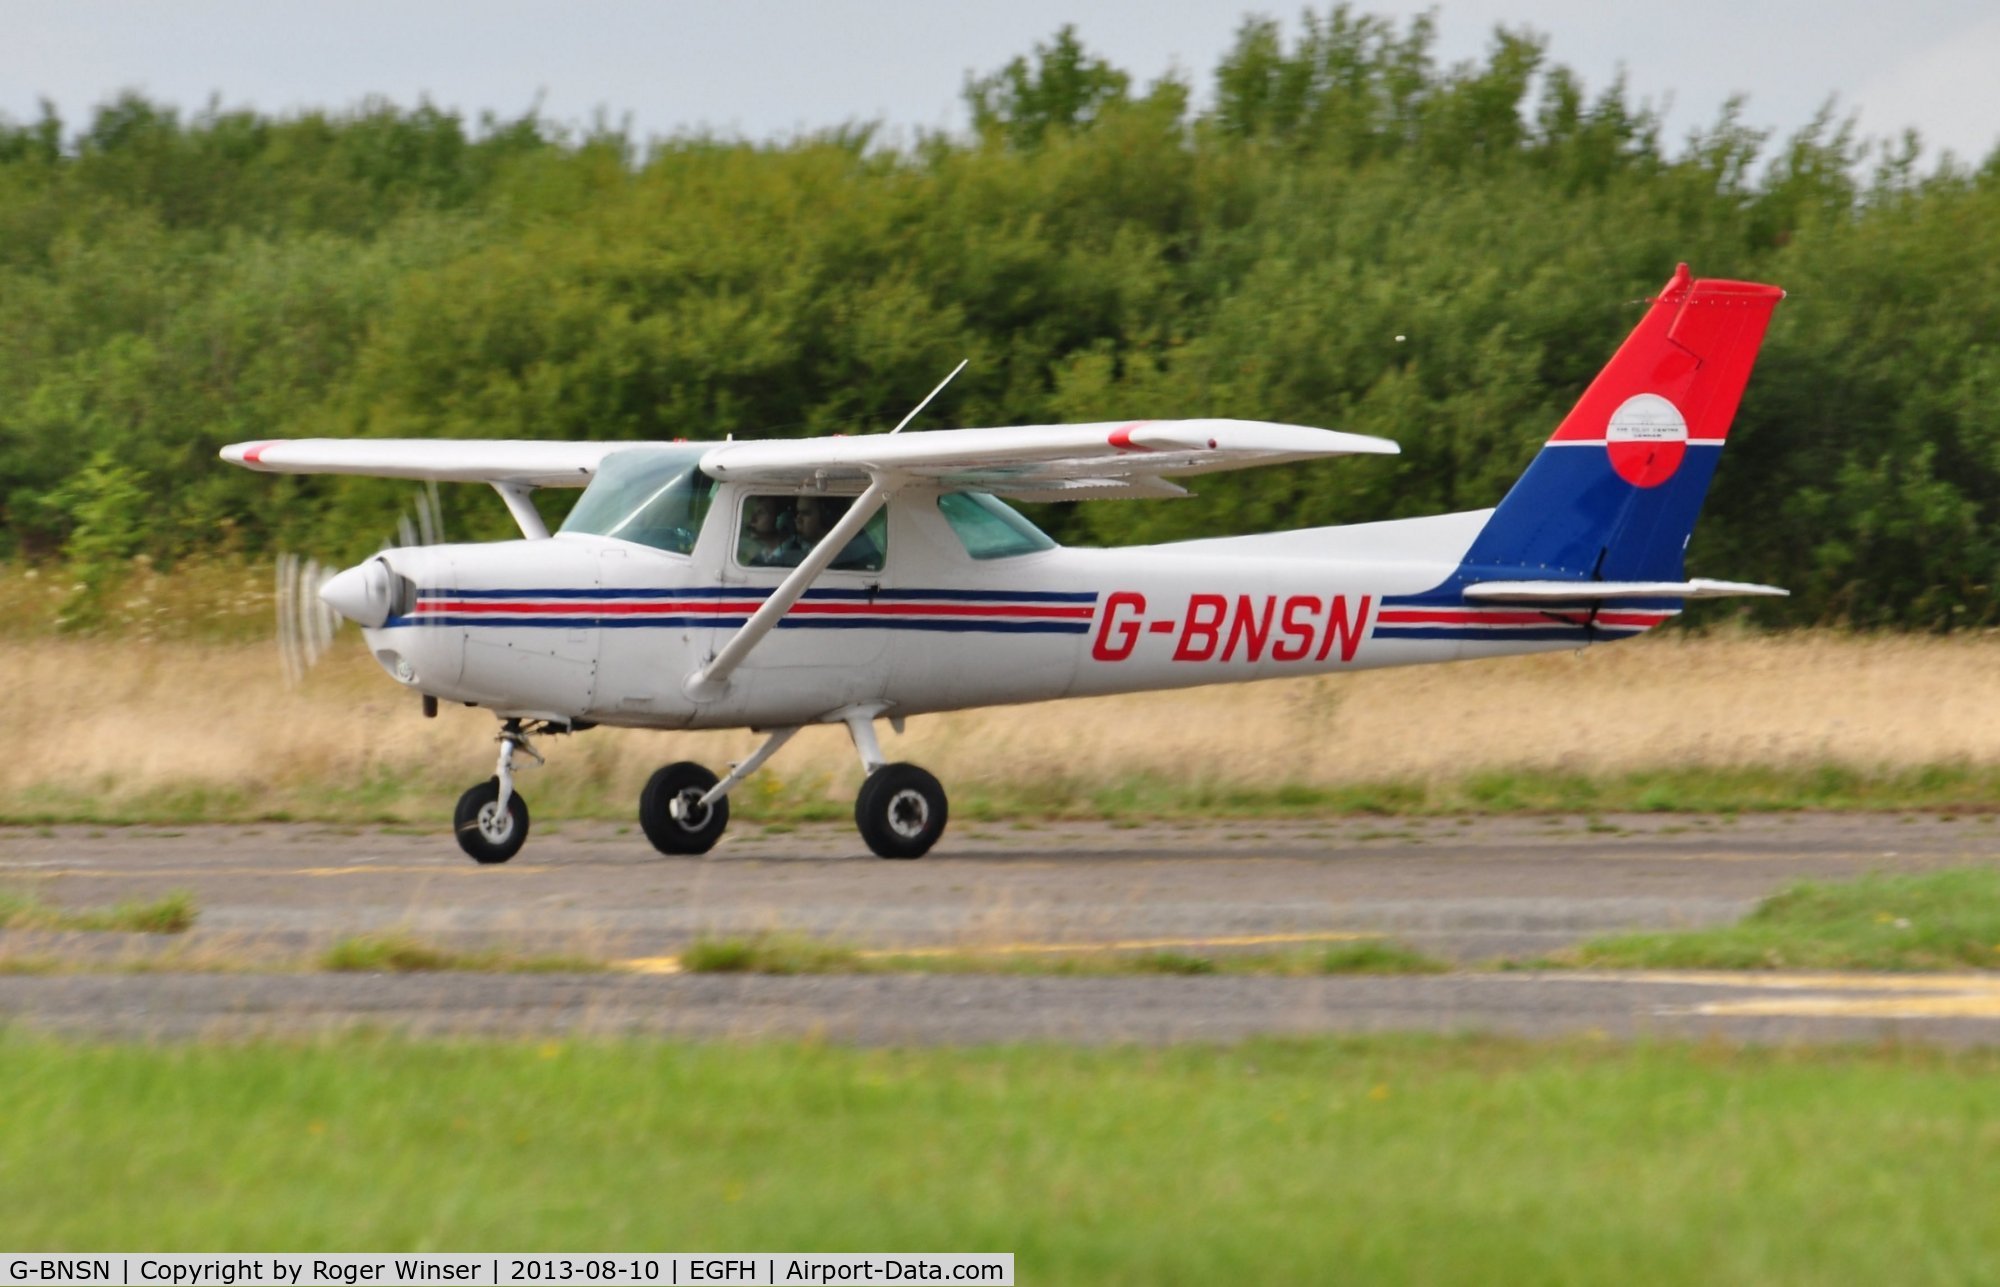 G-BNSN, 1983 Cessna 152 C/N 152-85776, Visiting Cessna 152 operated by the Pilot Centre at Denham Aerodrome.